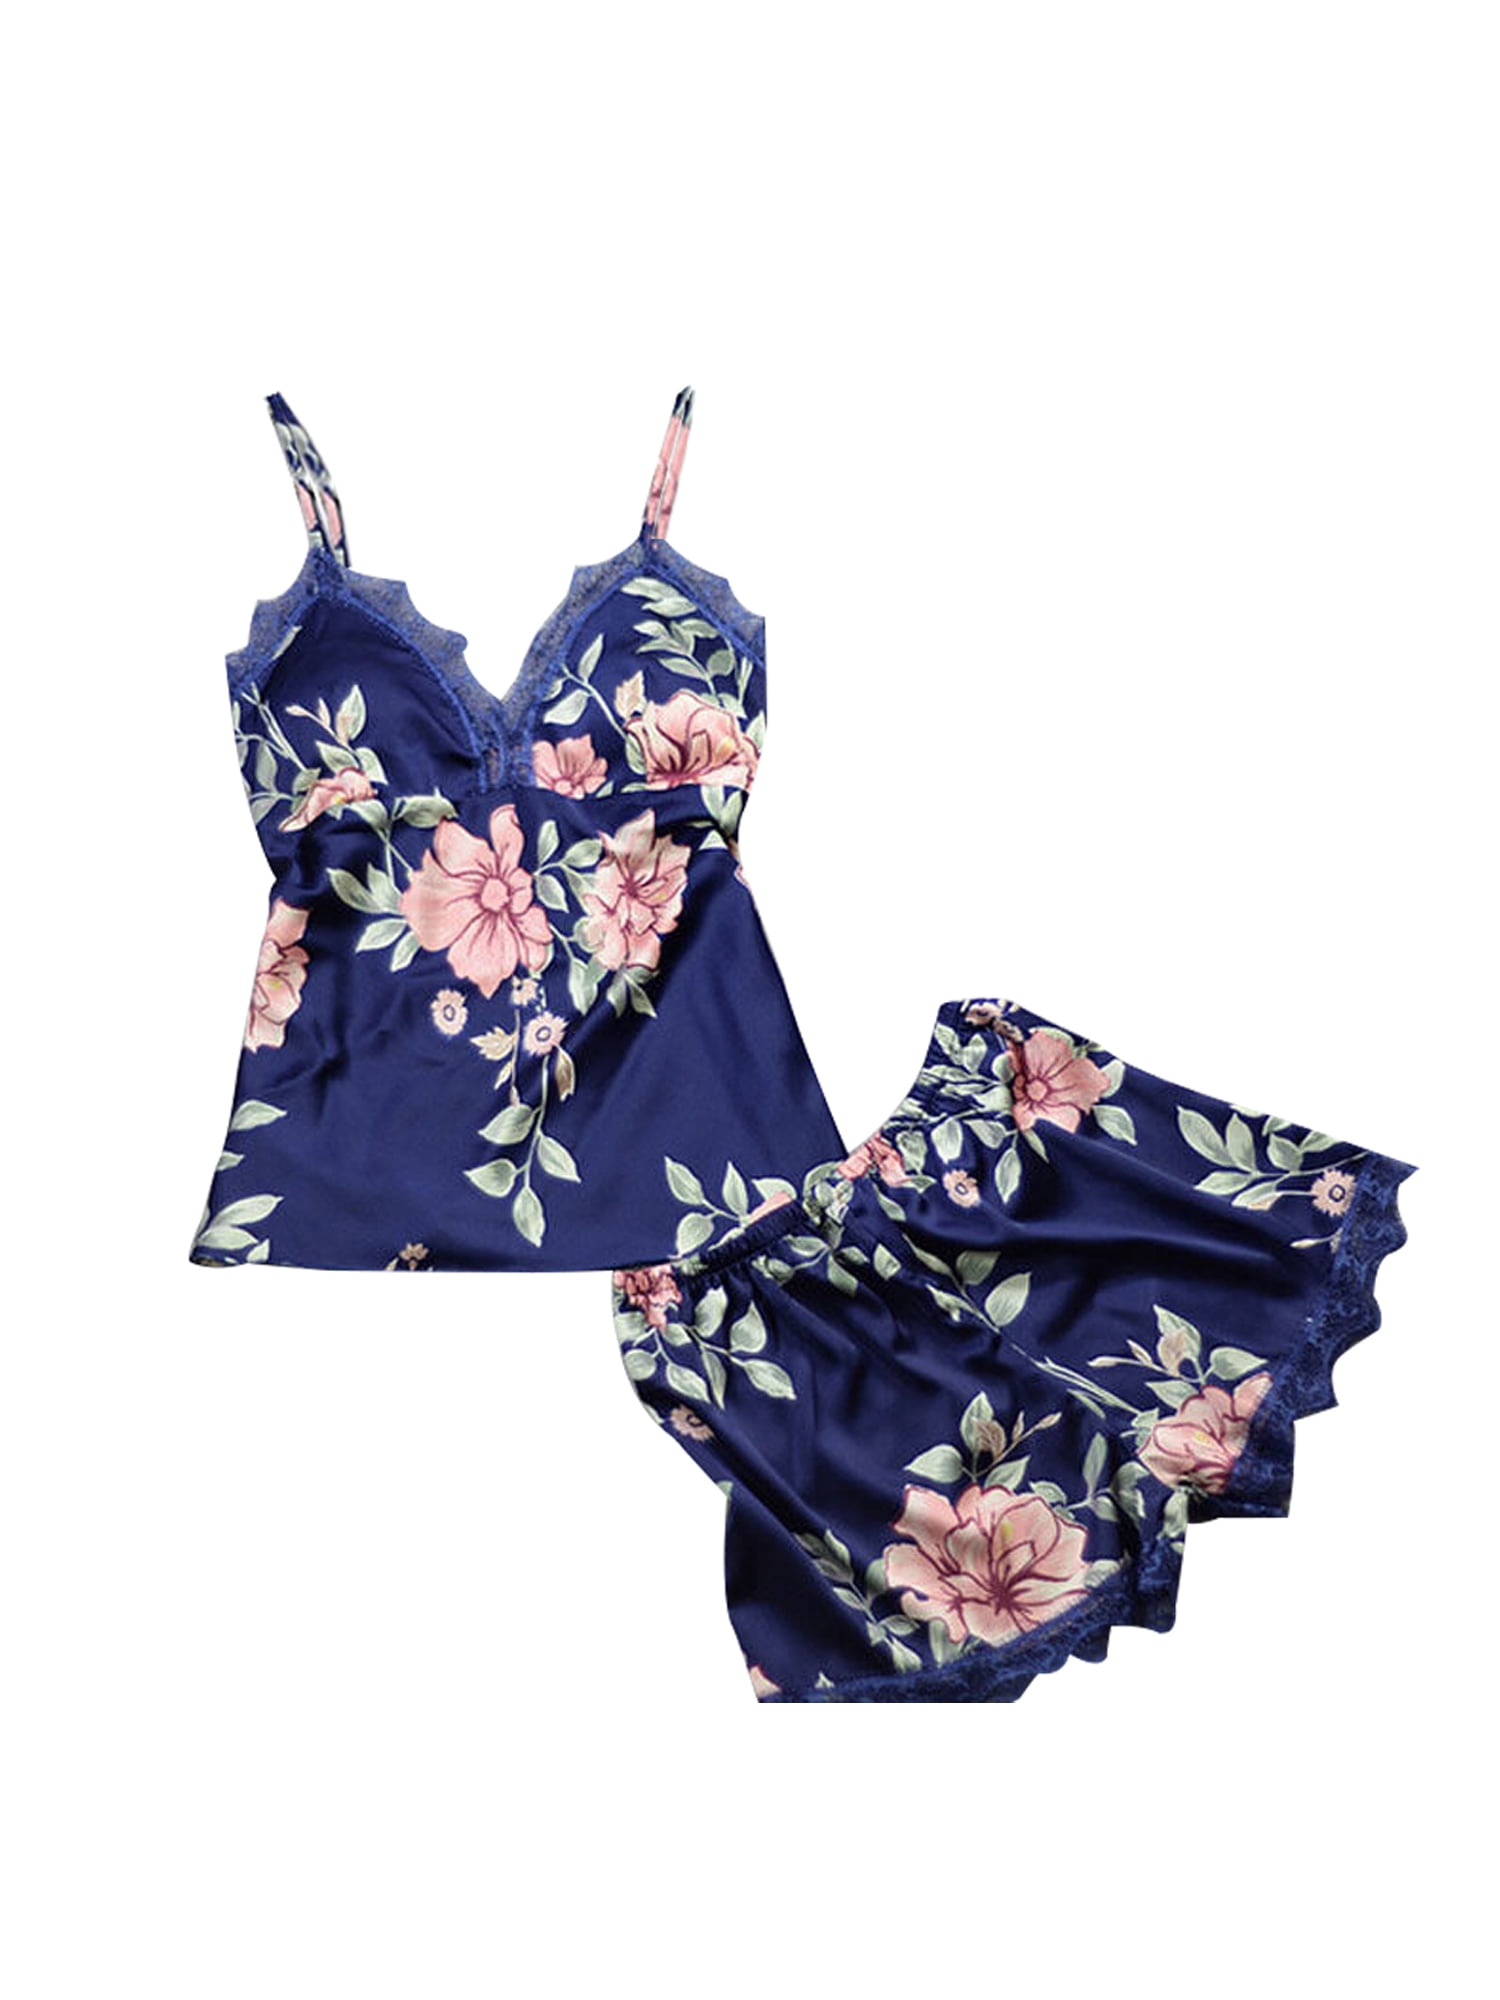 DuAnyozu 2Pcs Women Satin Silk Sleepwear Lace Floral Pyjamas Sets ...